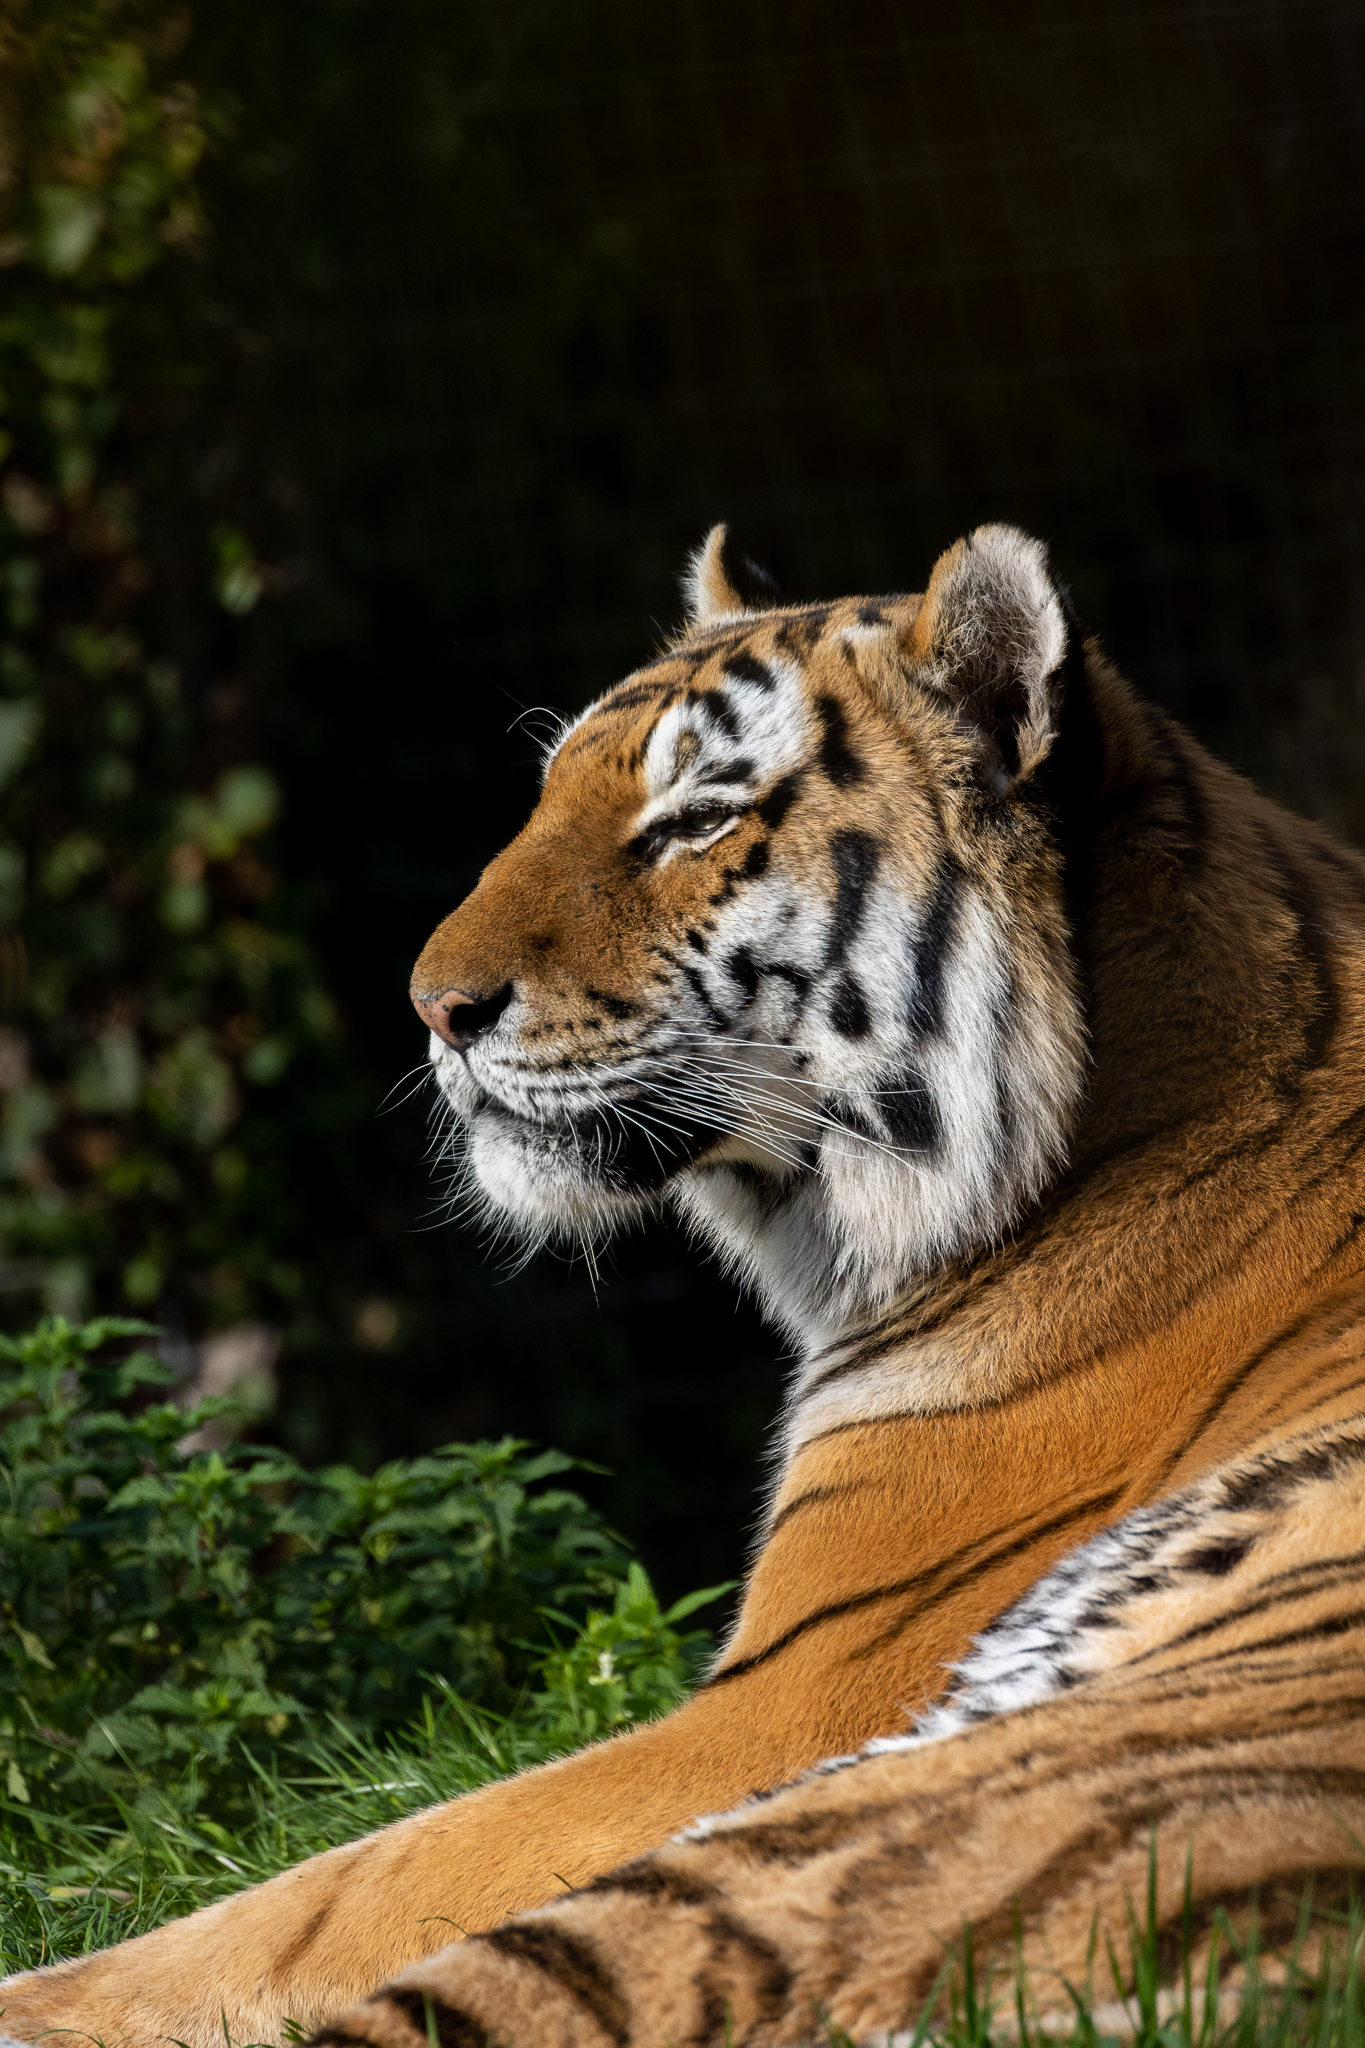 Tiger sat looking left against a dark background